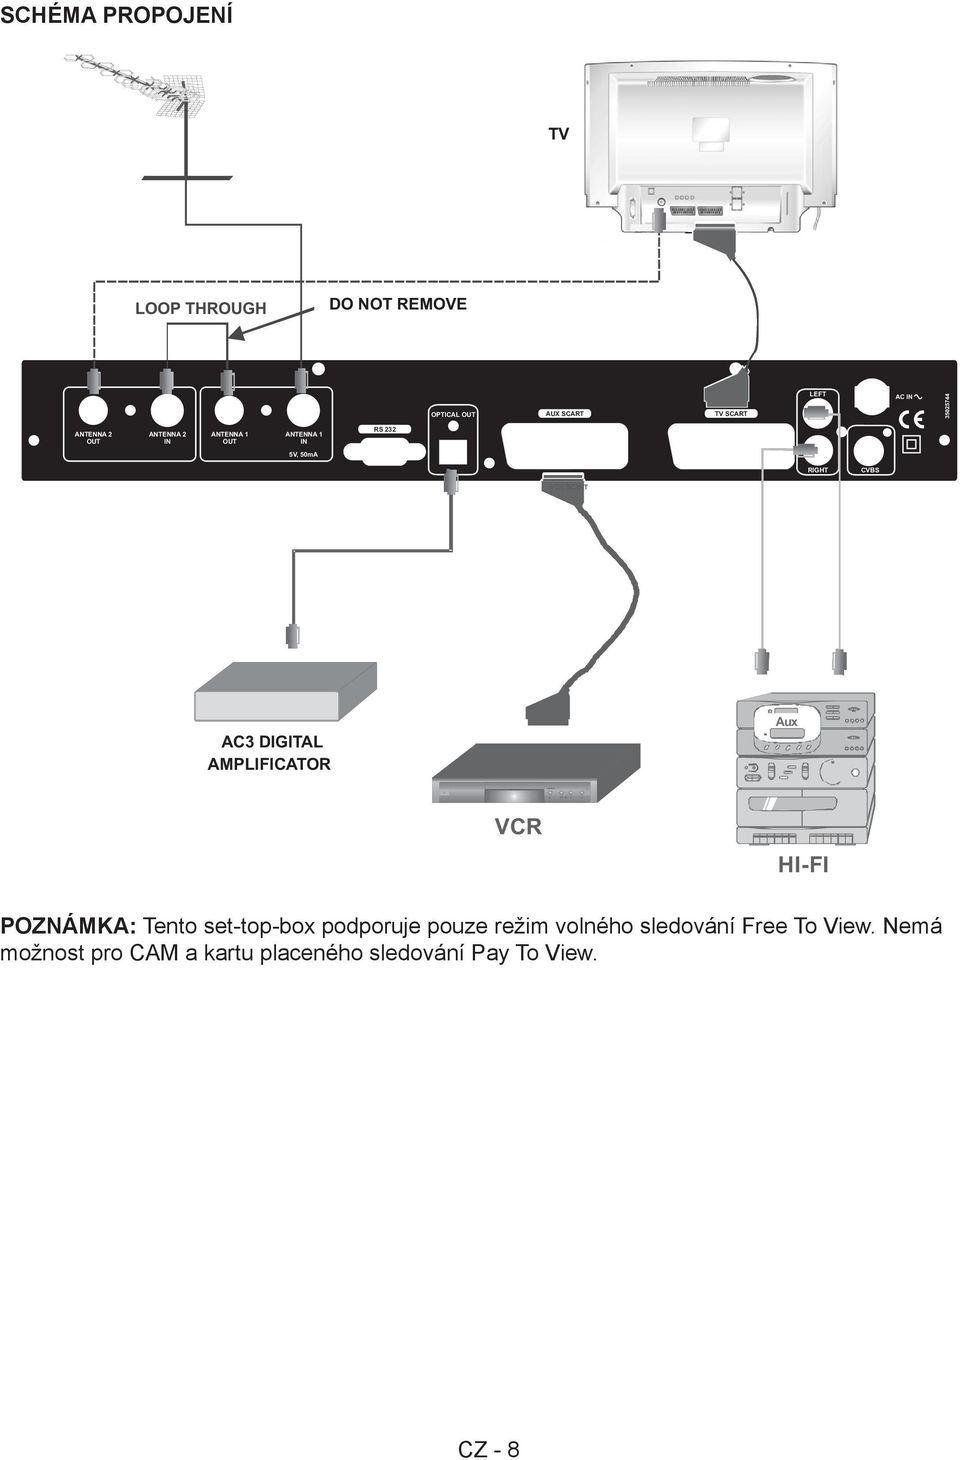 CVBS VCR SCART AC3 DIGITAL AMPLIFICATOR Aux VCR HI-FI HI-FI POZNÁMKA: Tento set-top-box podporuje